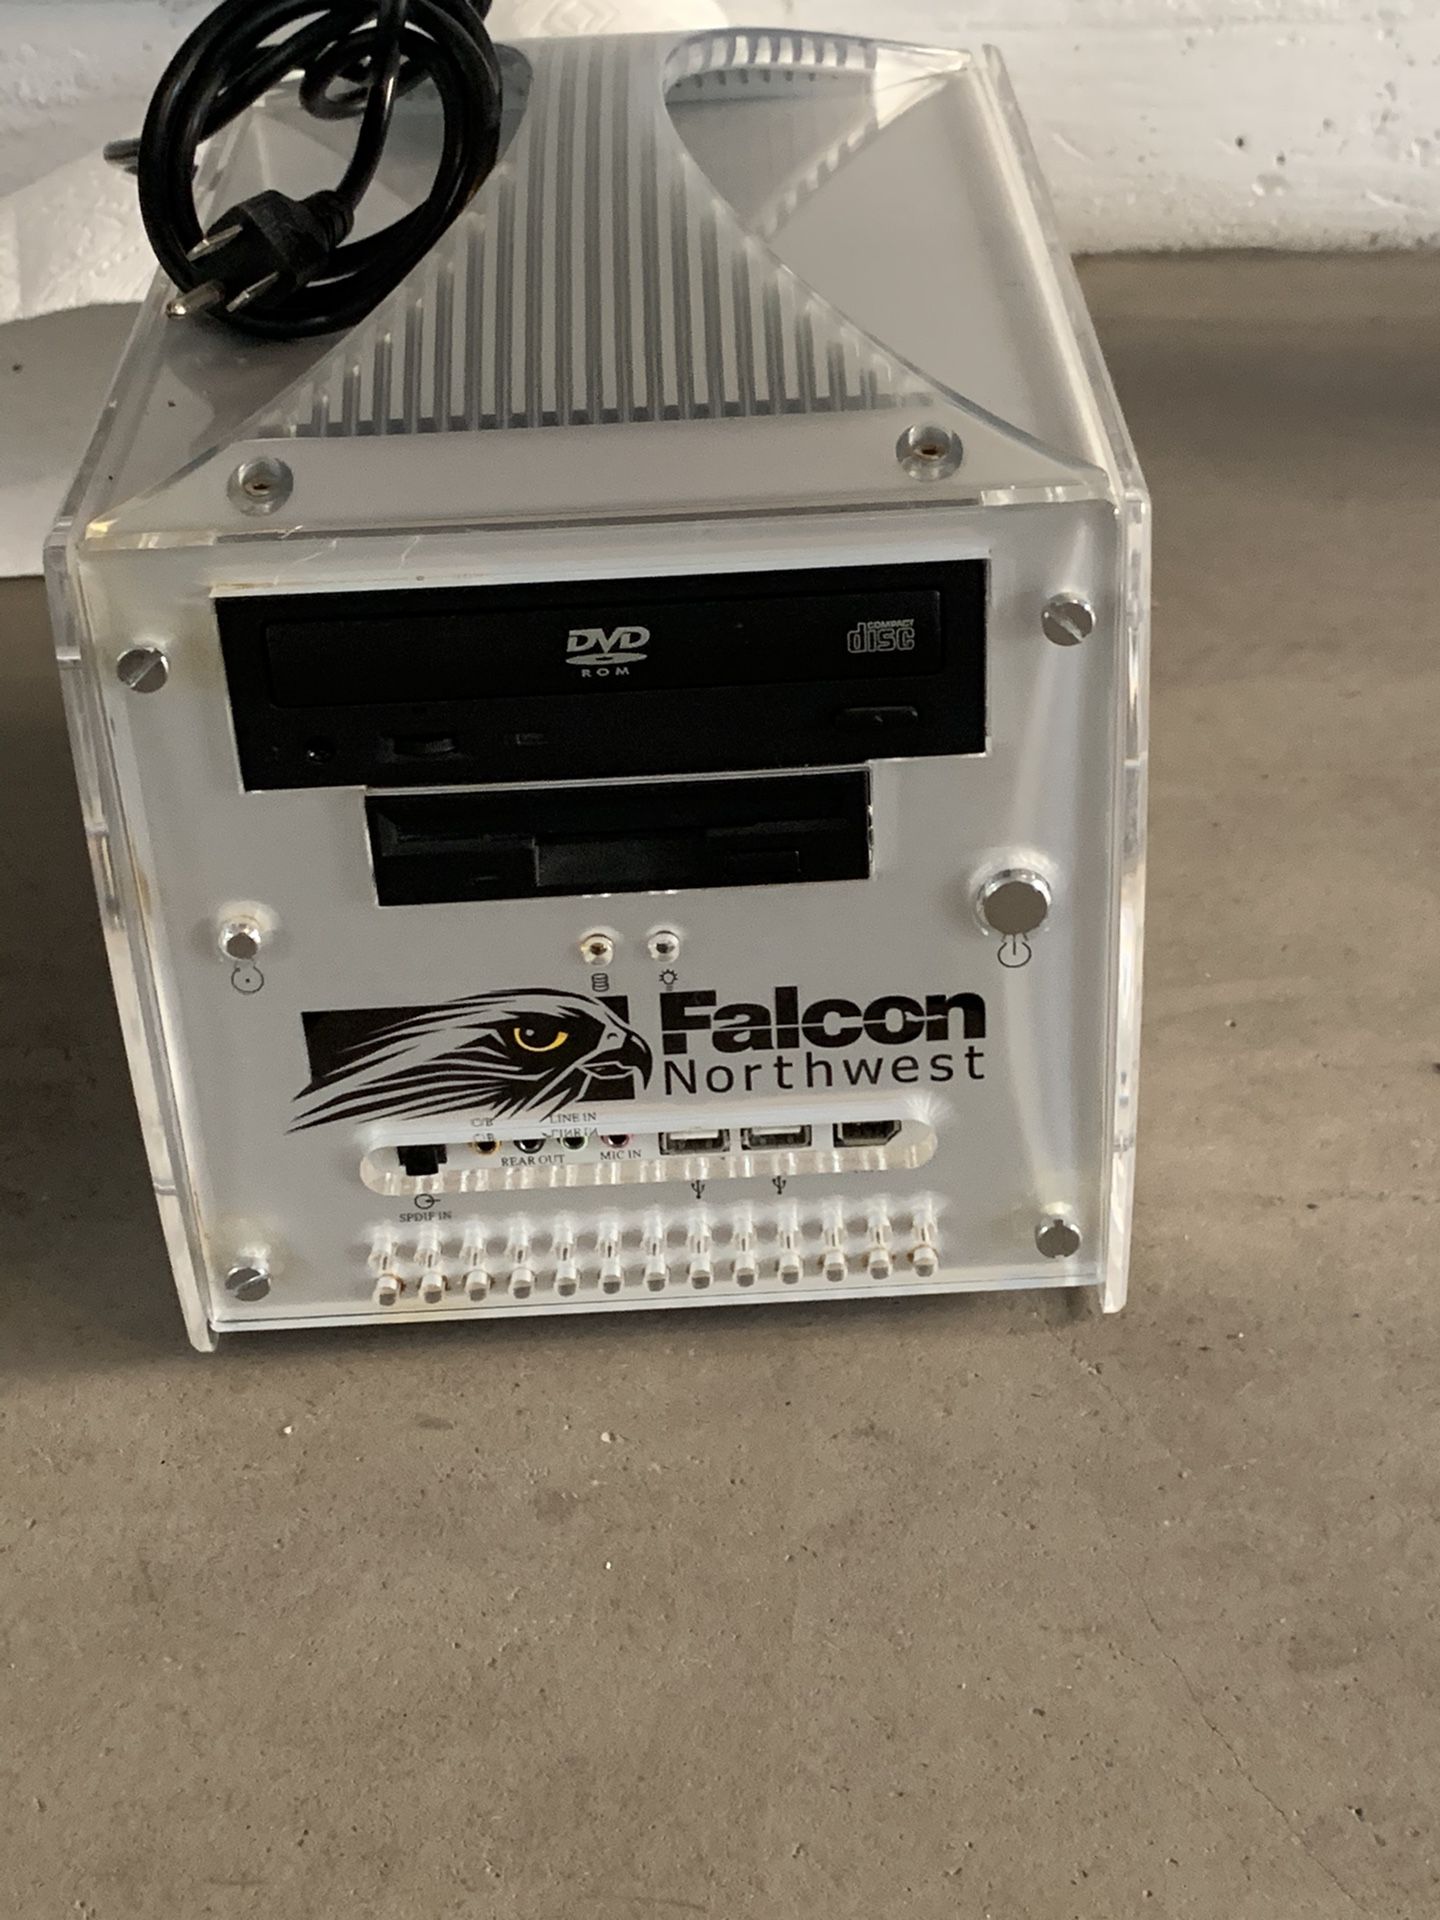 Falcon Northwest DVD Player